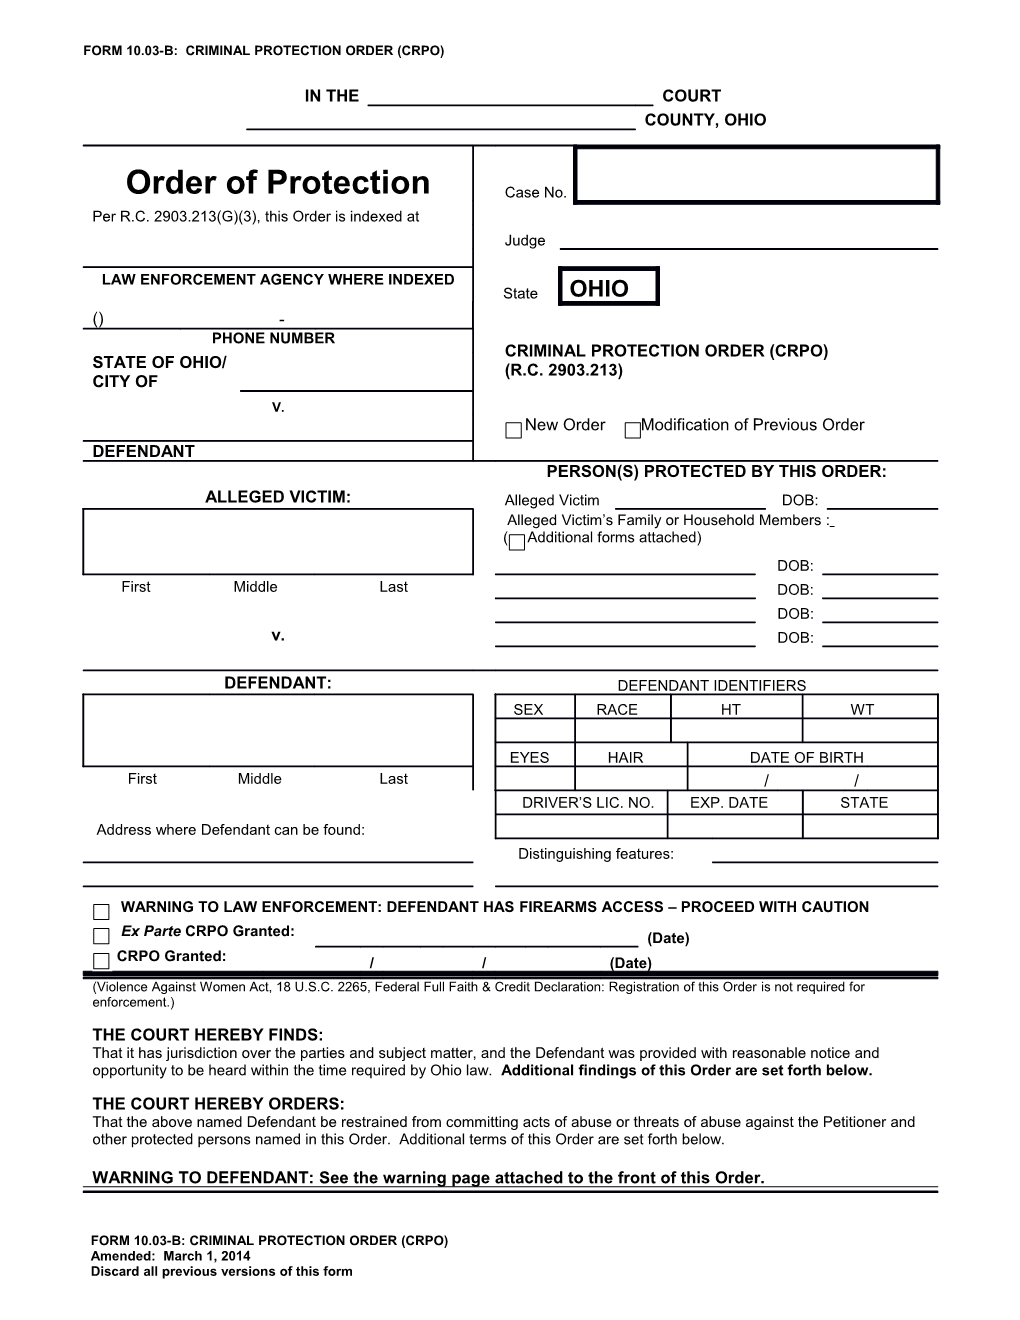 Form 10.03-B:Criminal Protection Order (Crpo)